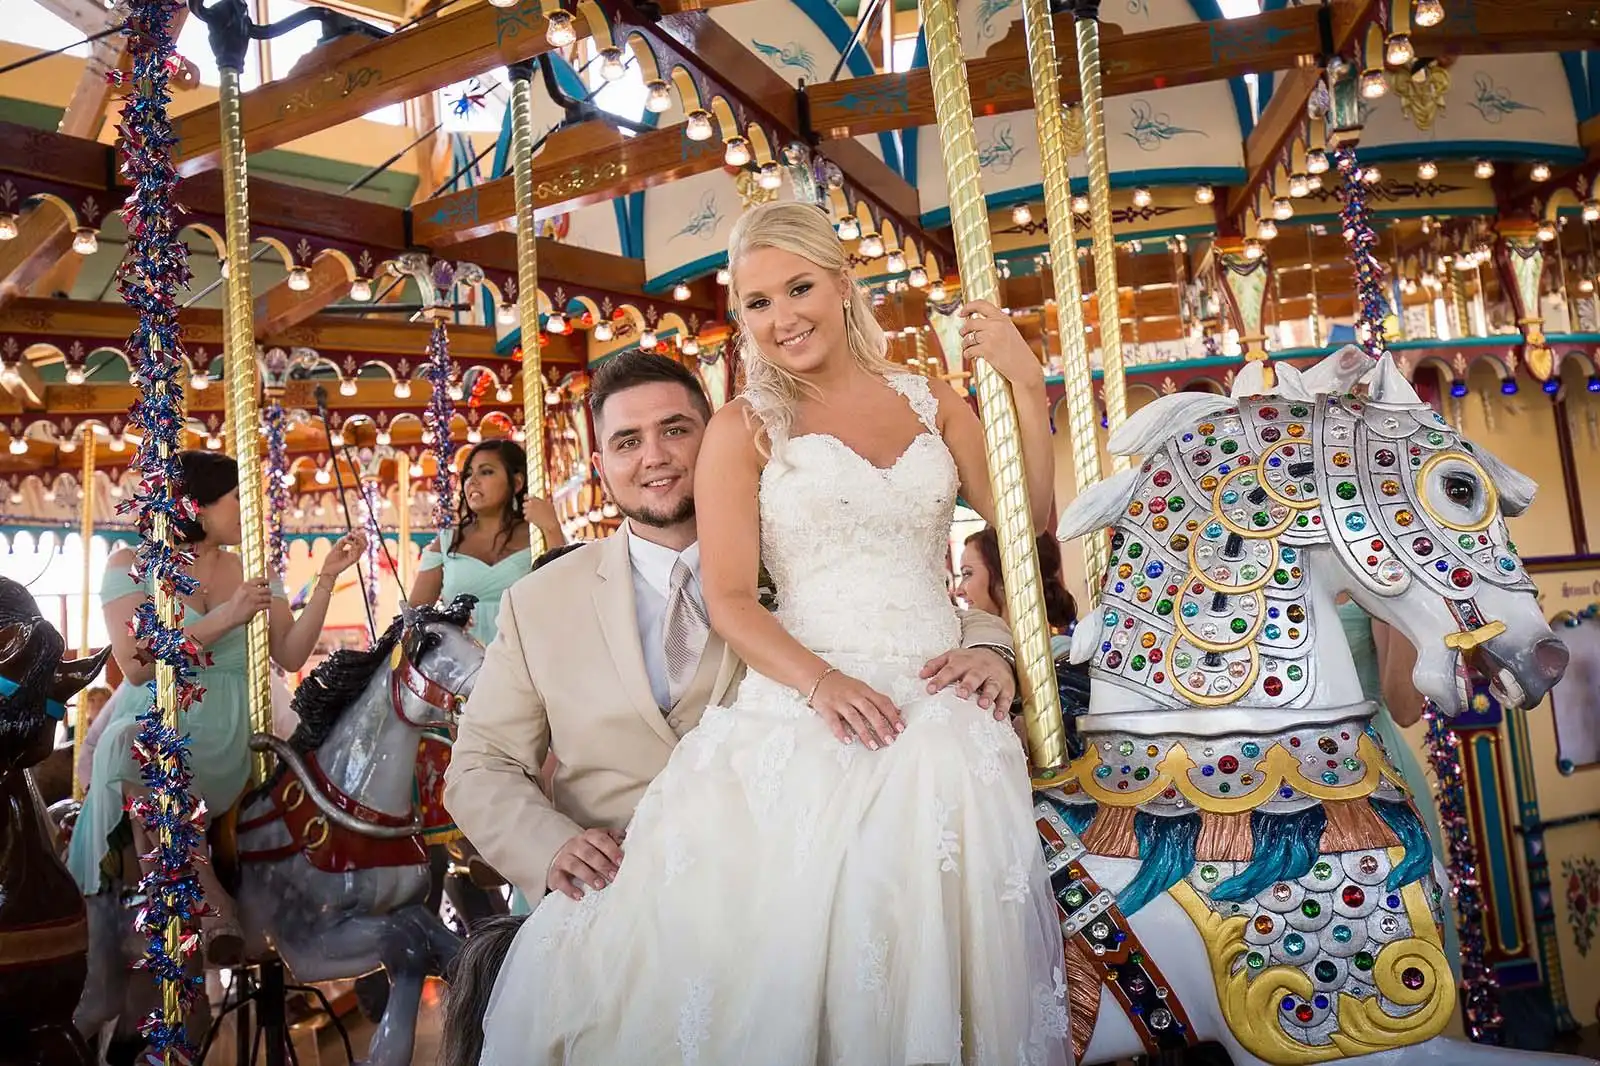 Wedding photos on the Carousel.